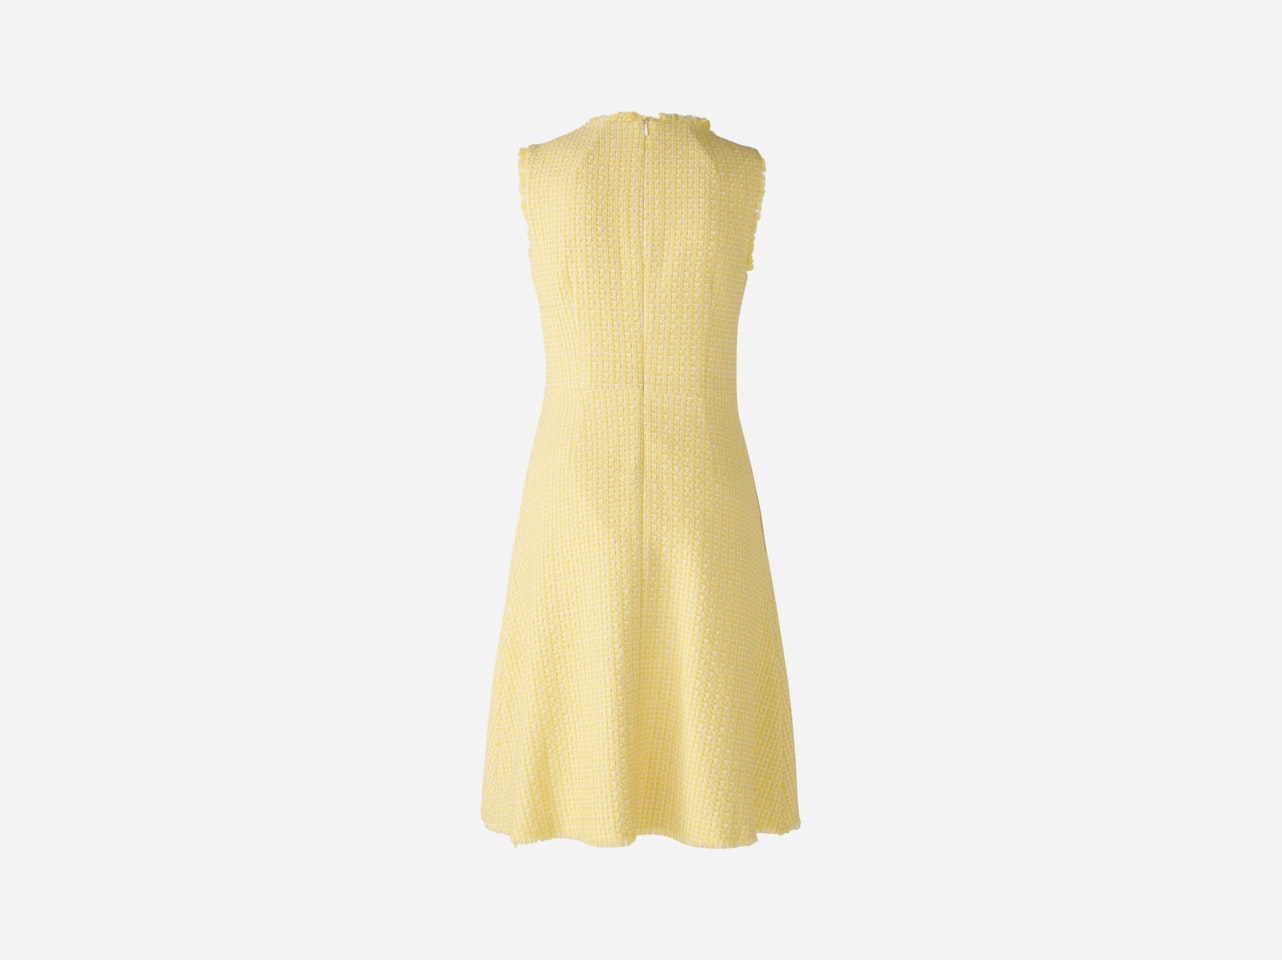 Bild 9 von Dress french style in white yellow | Oui